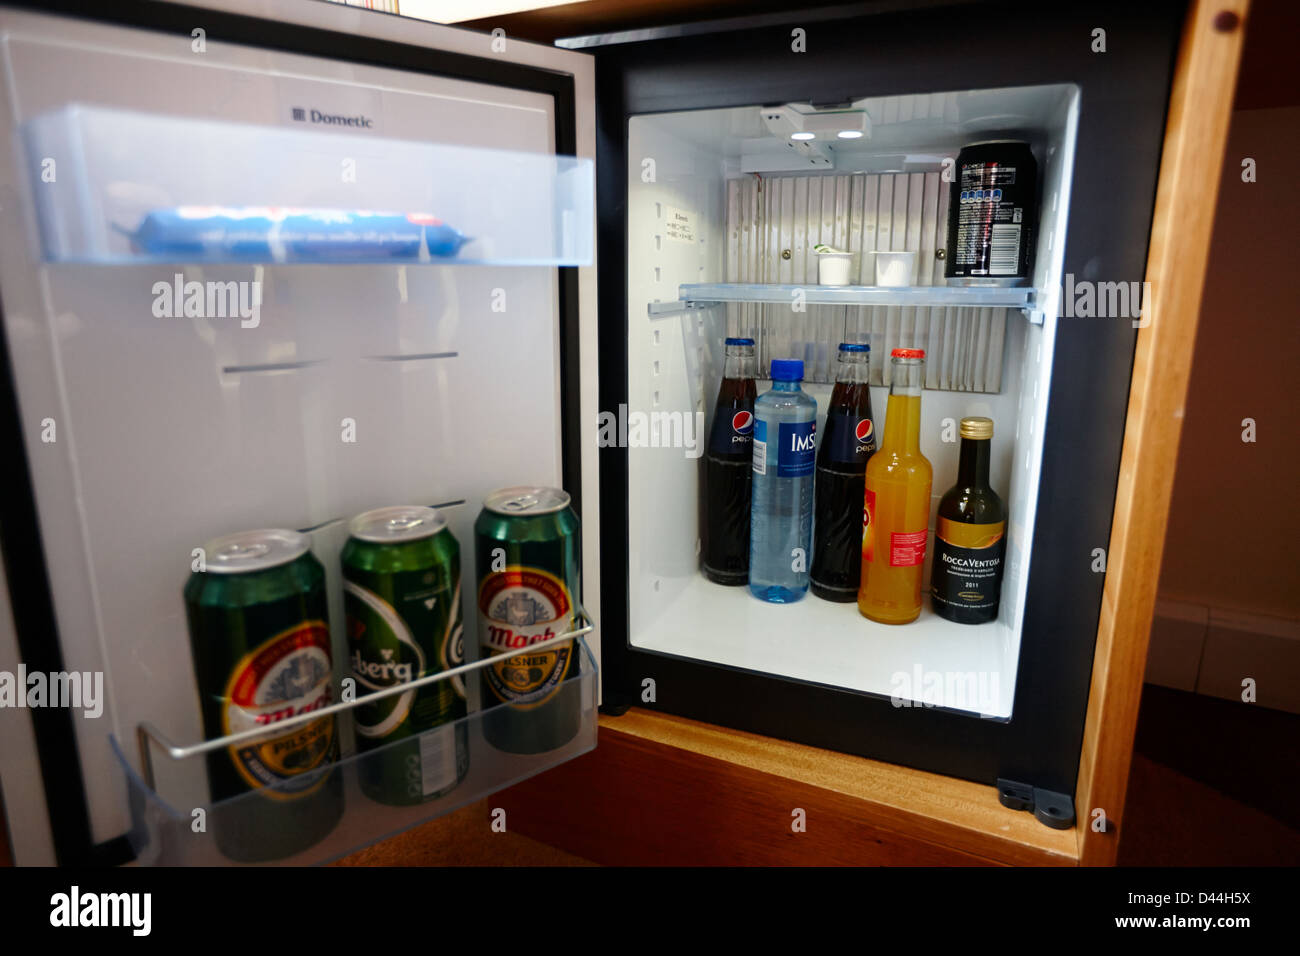 Mini bar fridge hi-res stock photography and images - Alamy